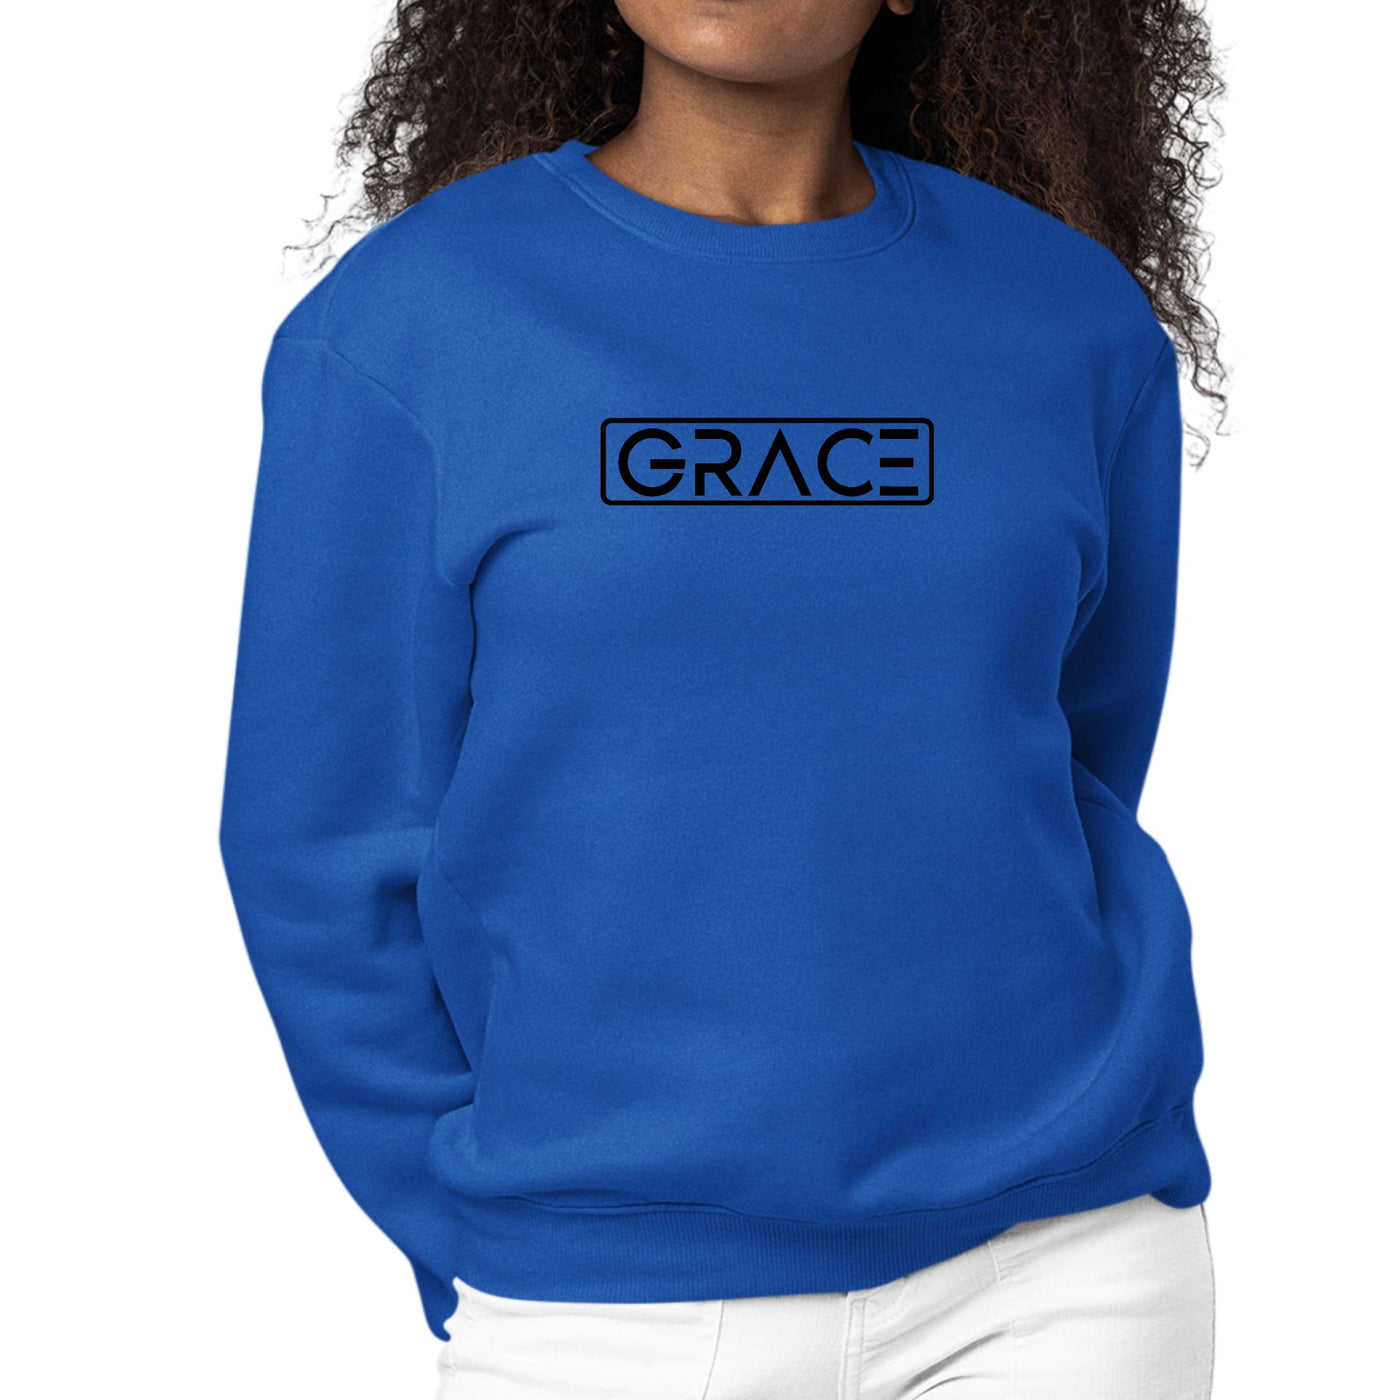 Womens Graphic Sweatshirt Grace Christian Black Illustration - Womens